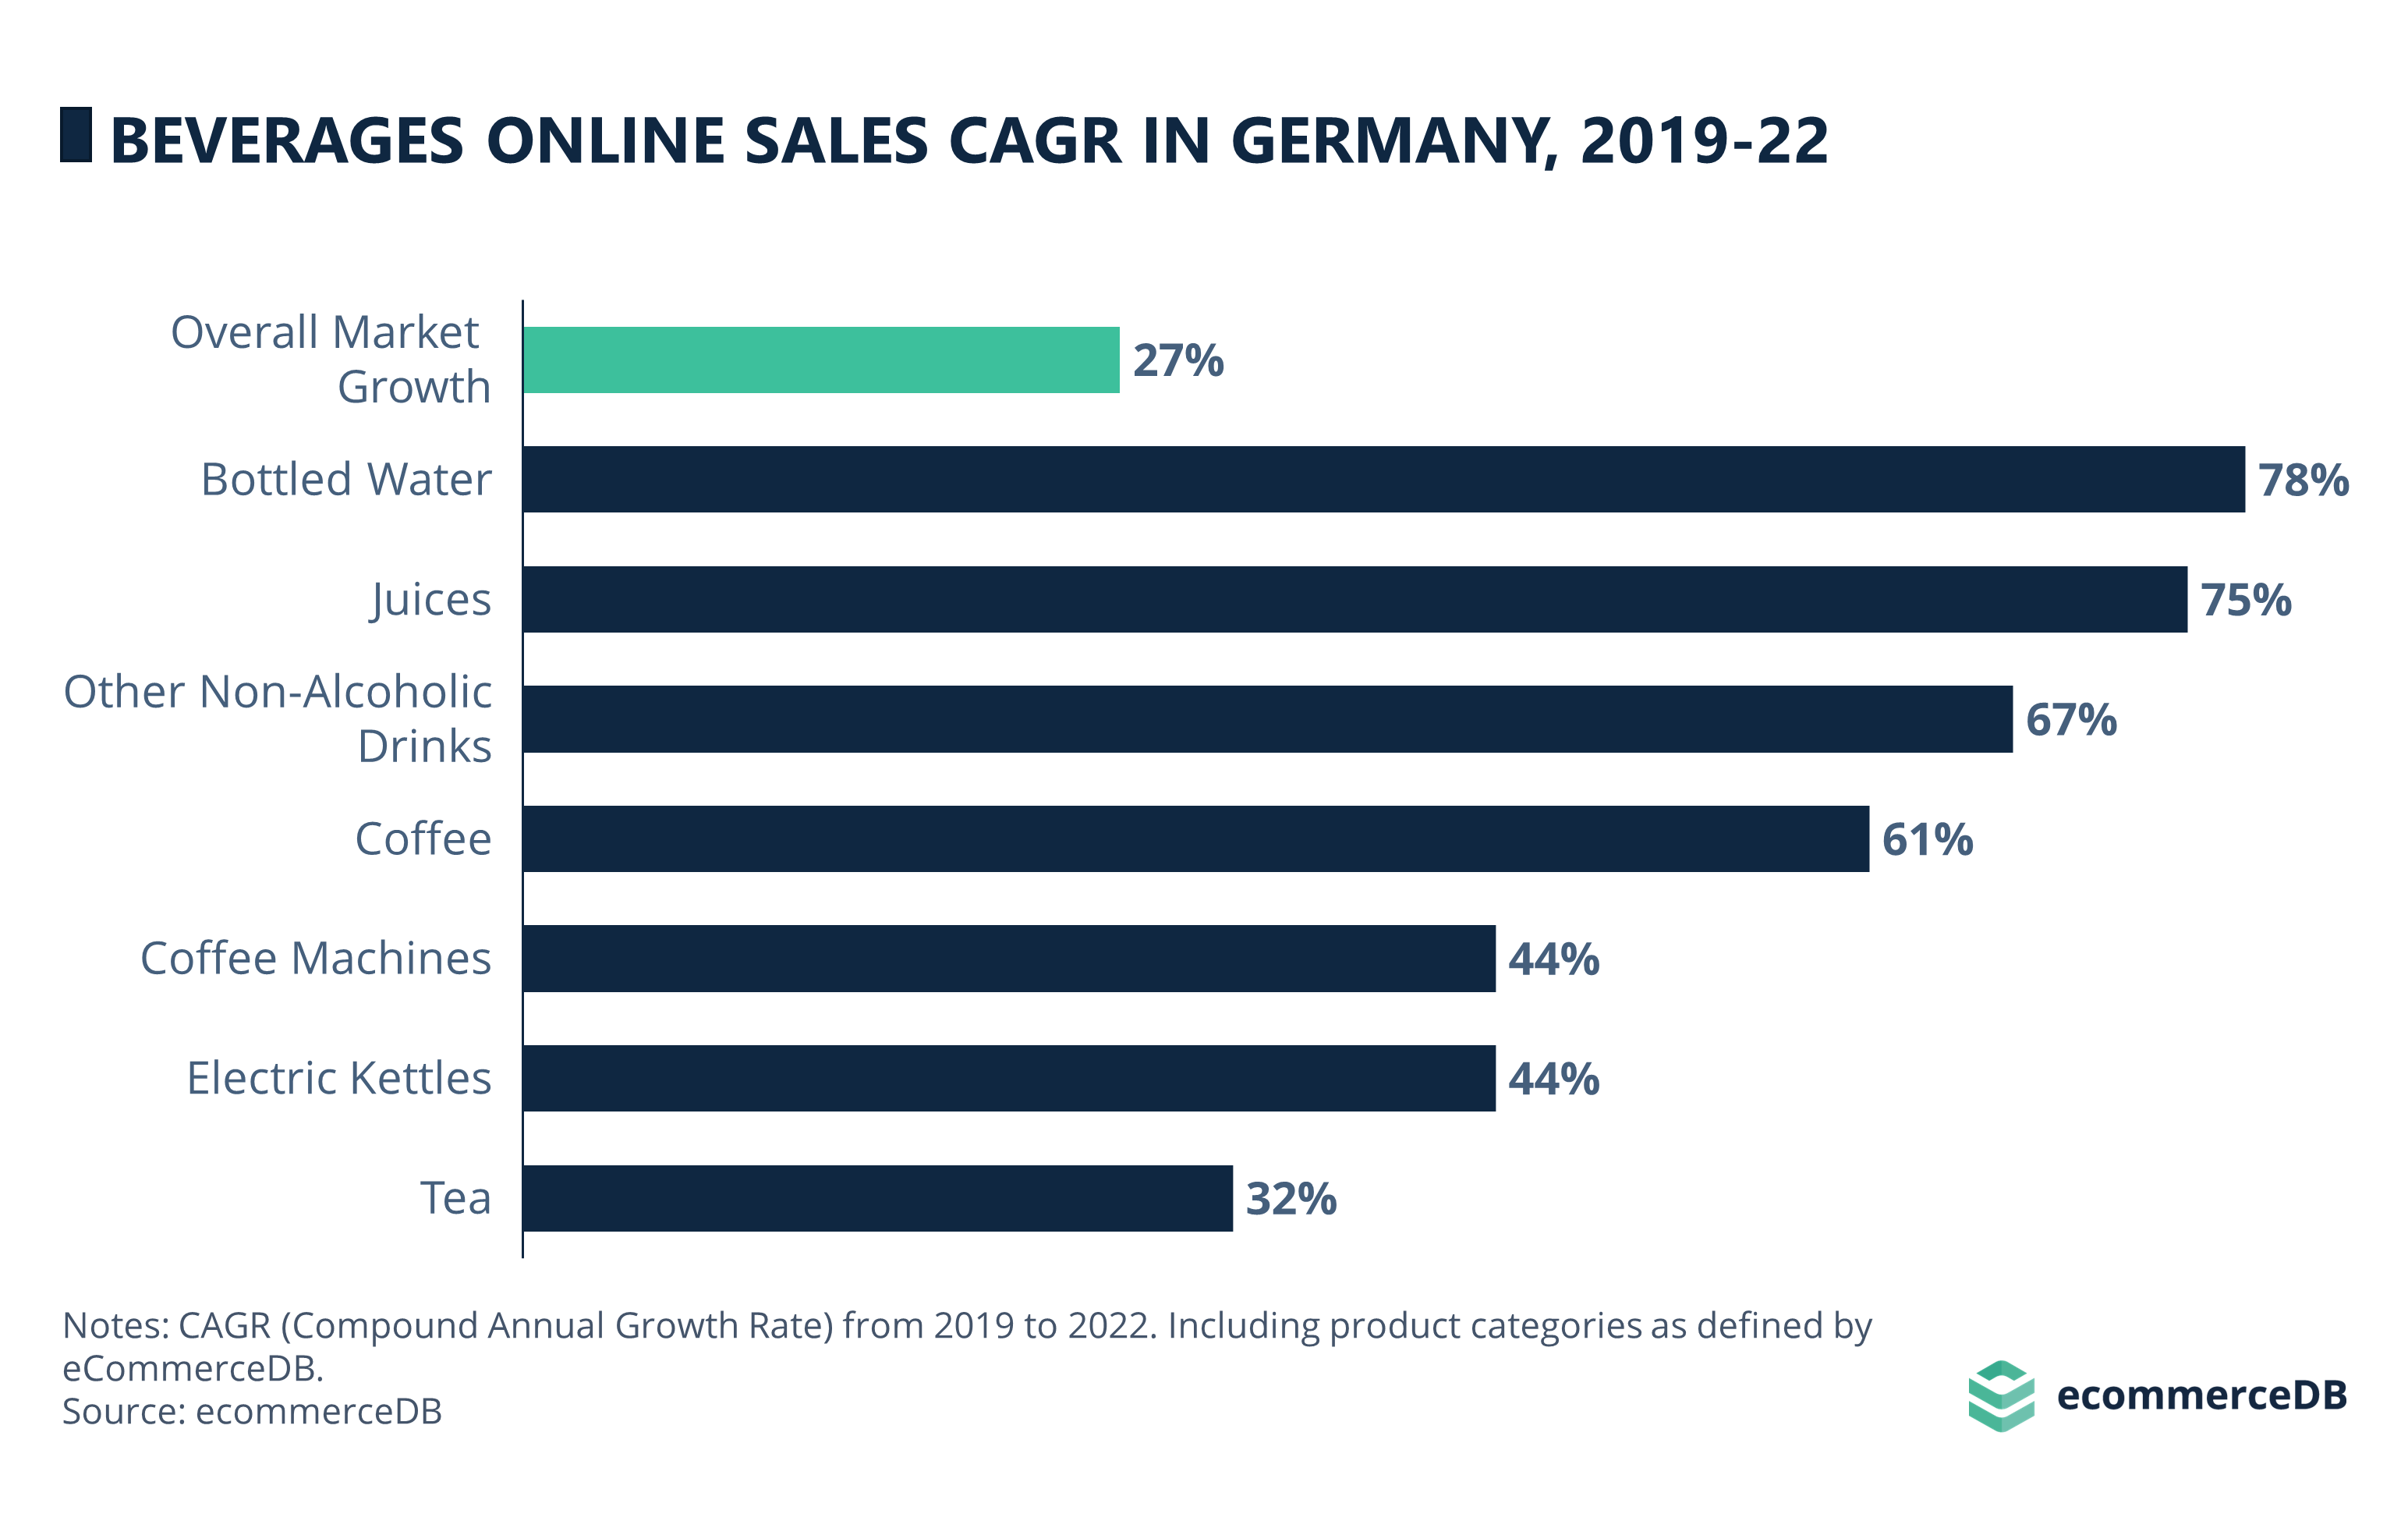 Beverages Online Sales CAGR in Germany, 19-22